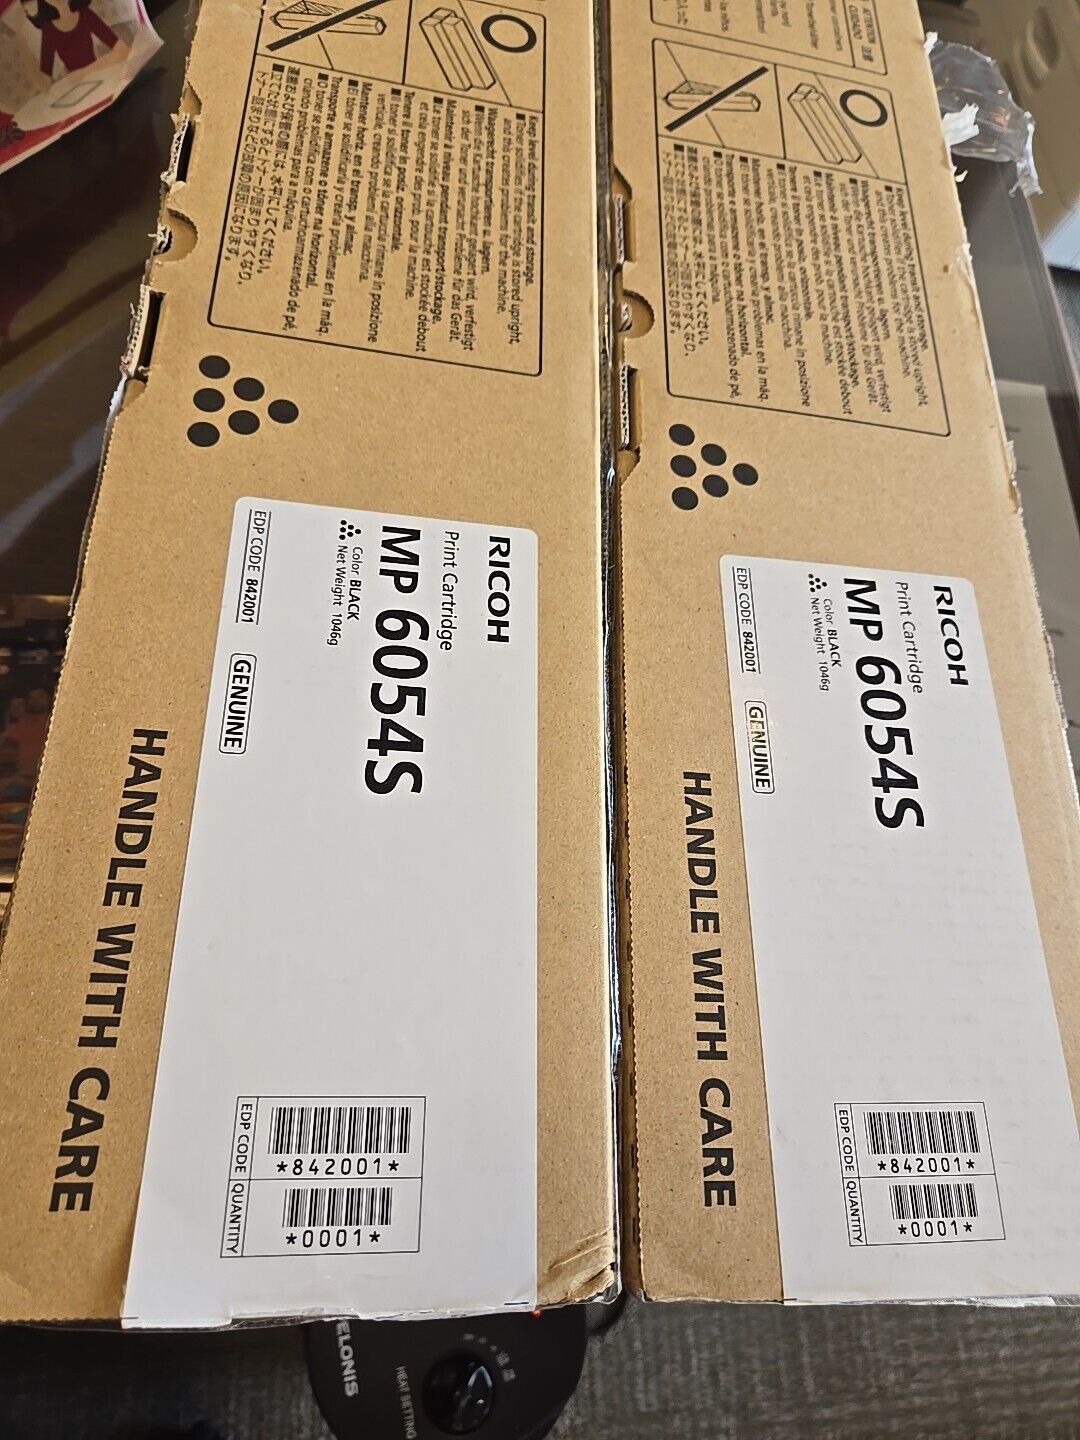 Lot of 2 NEW Genuine Ricoh 842001 for MP6054S Print Catridge.